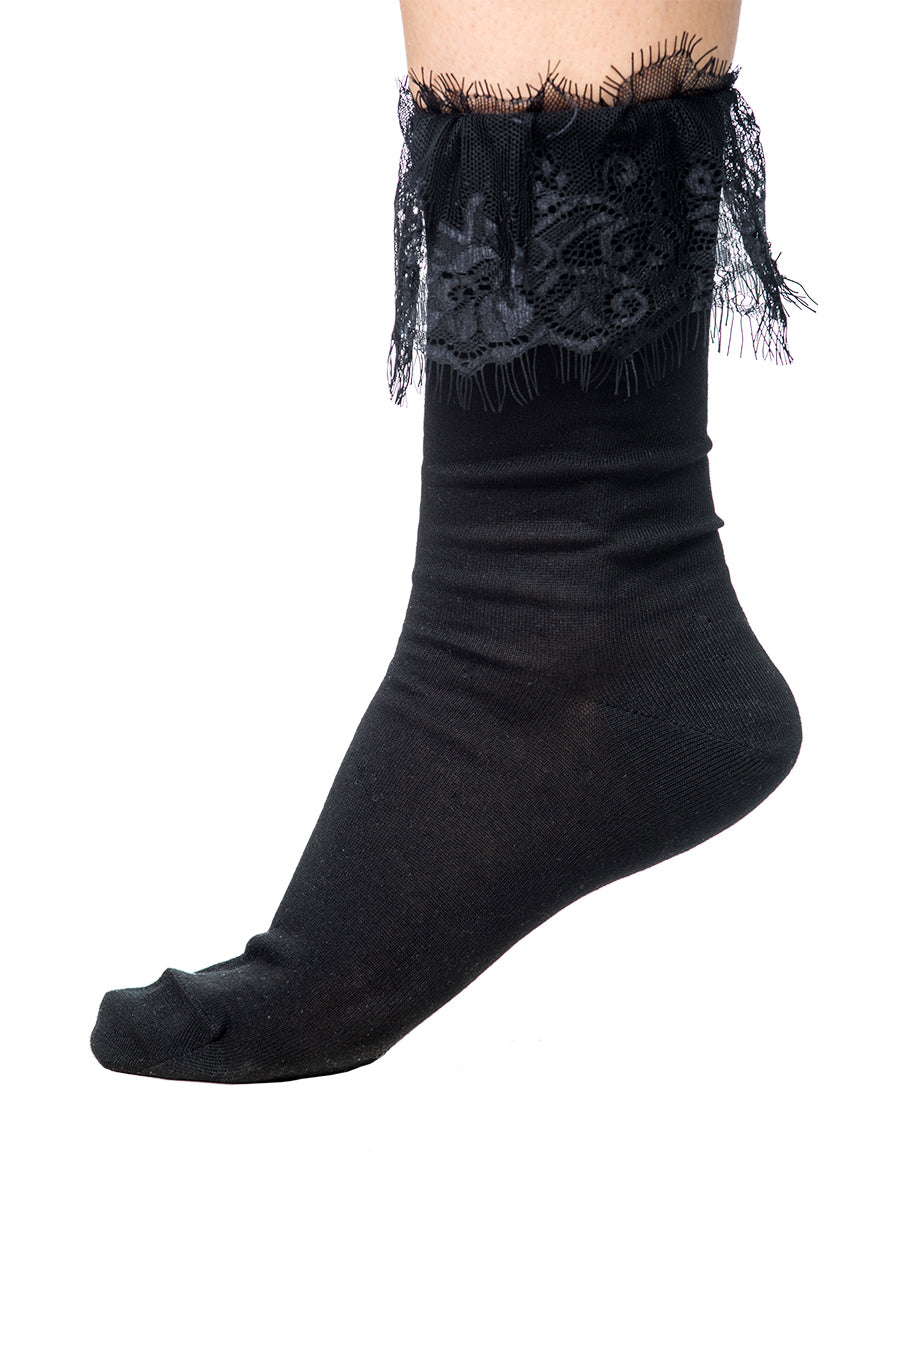 Seraphima-socks-black-lace